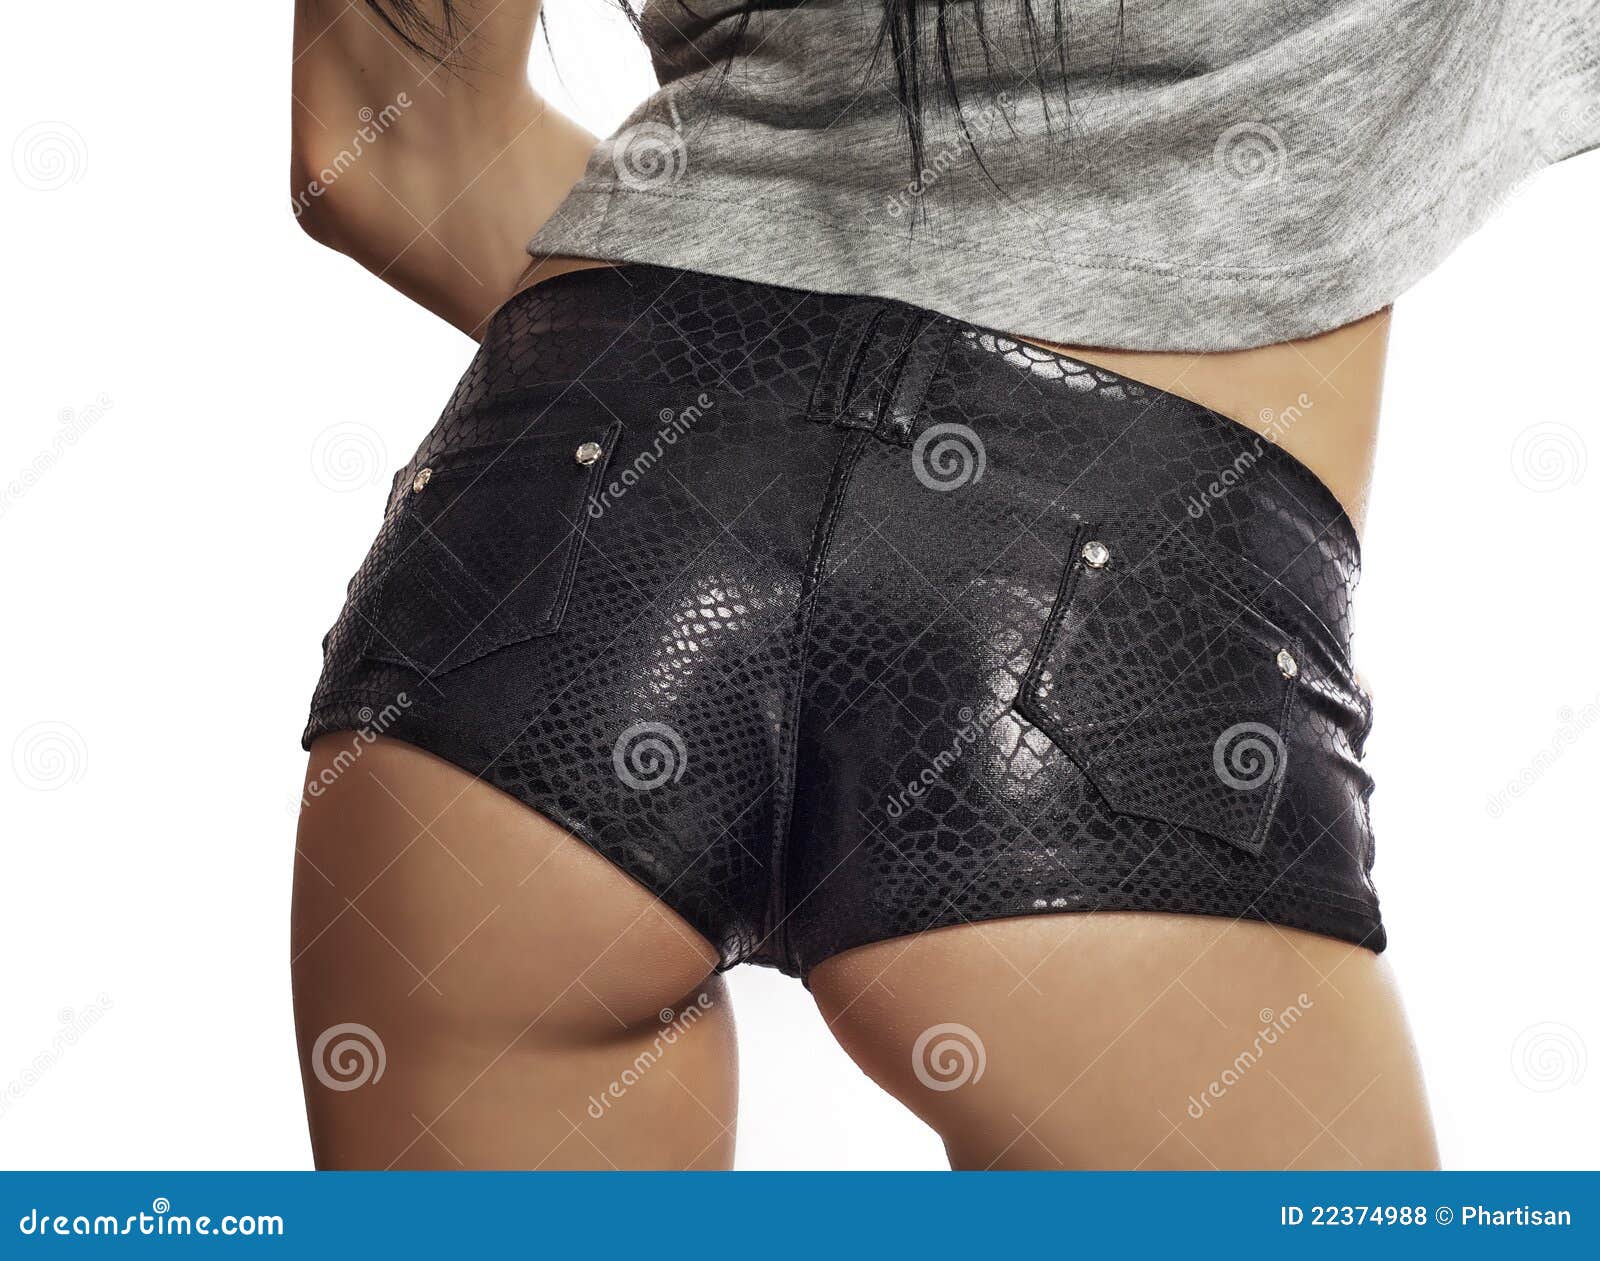 tight booty shorts selfies